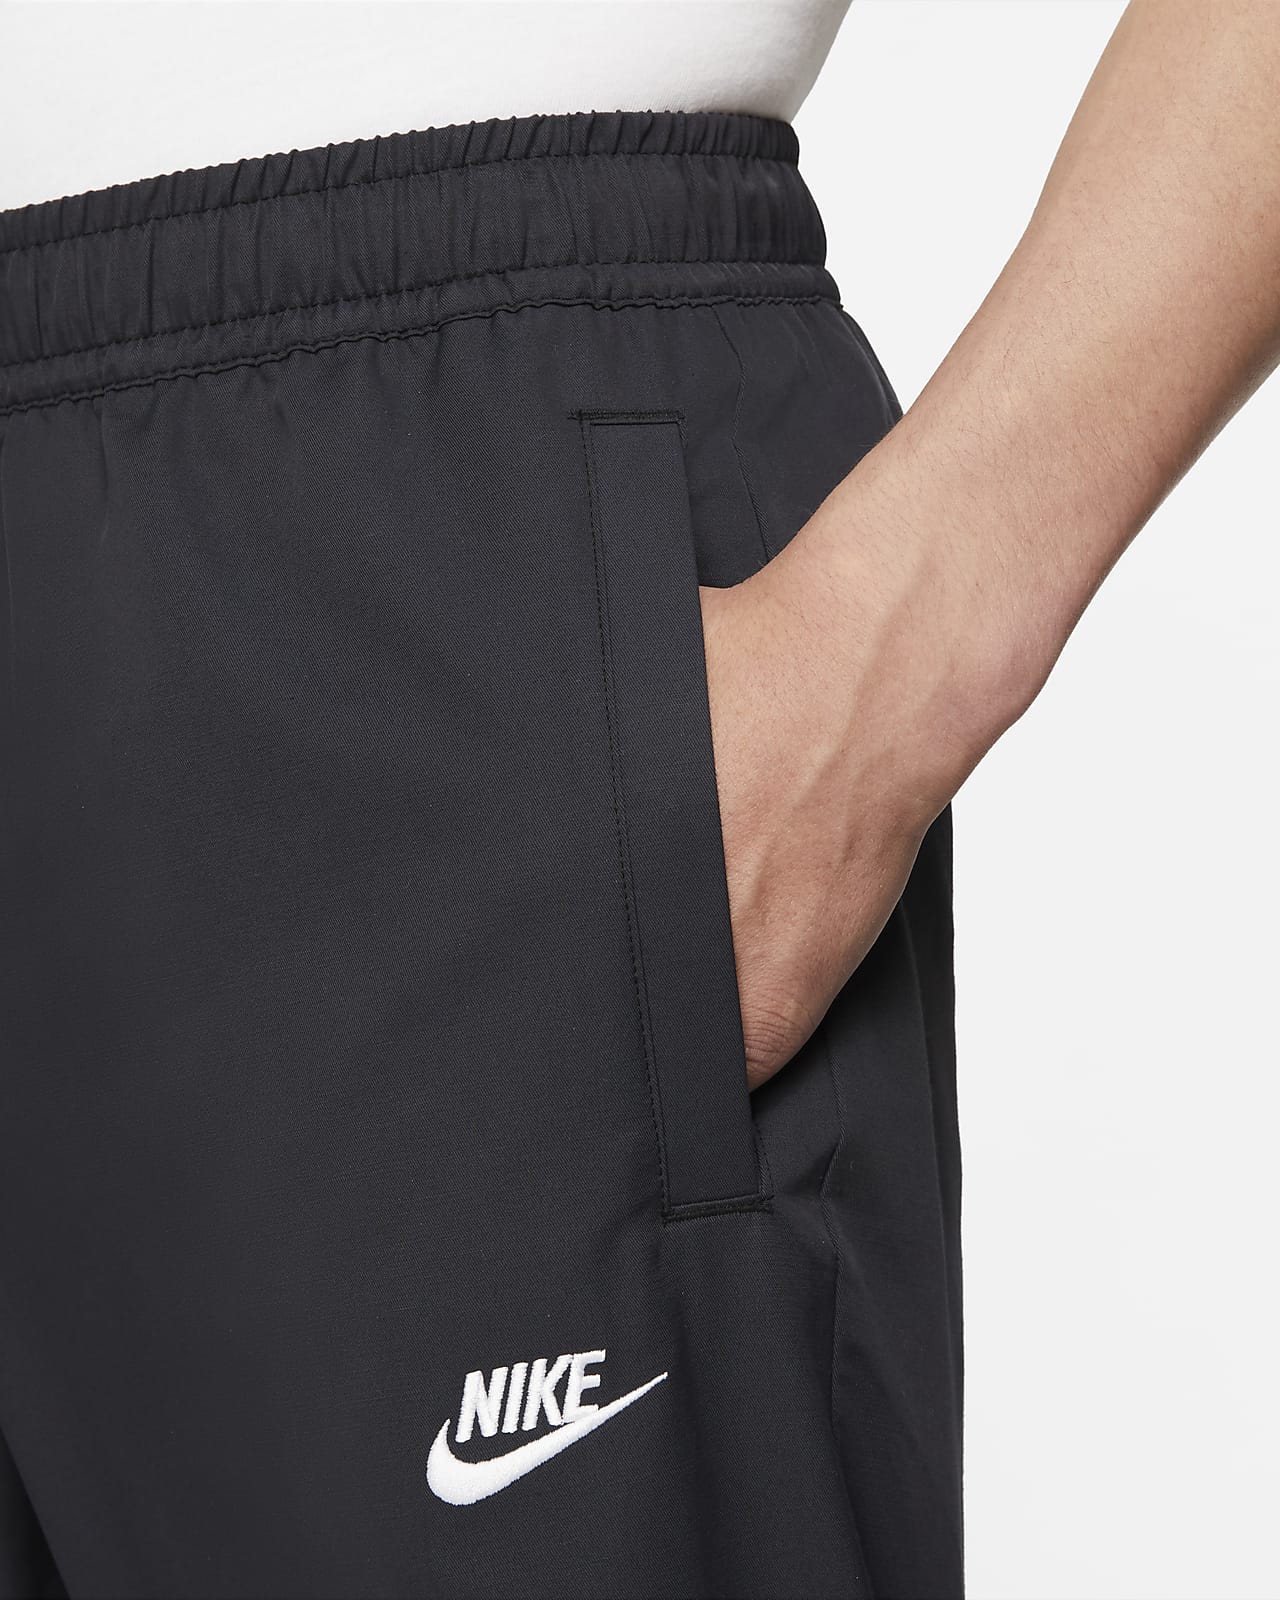 Joggers & Sweatpants. Nike.com